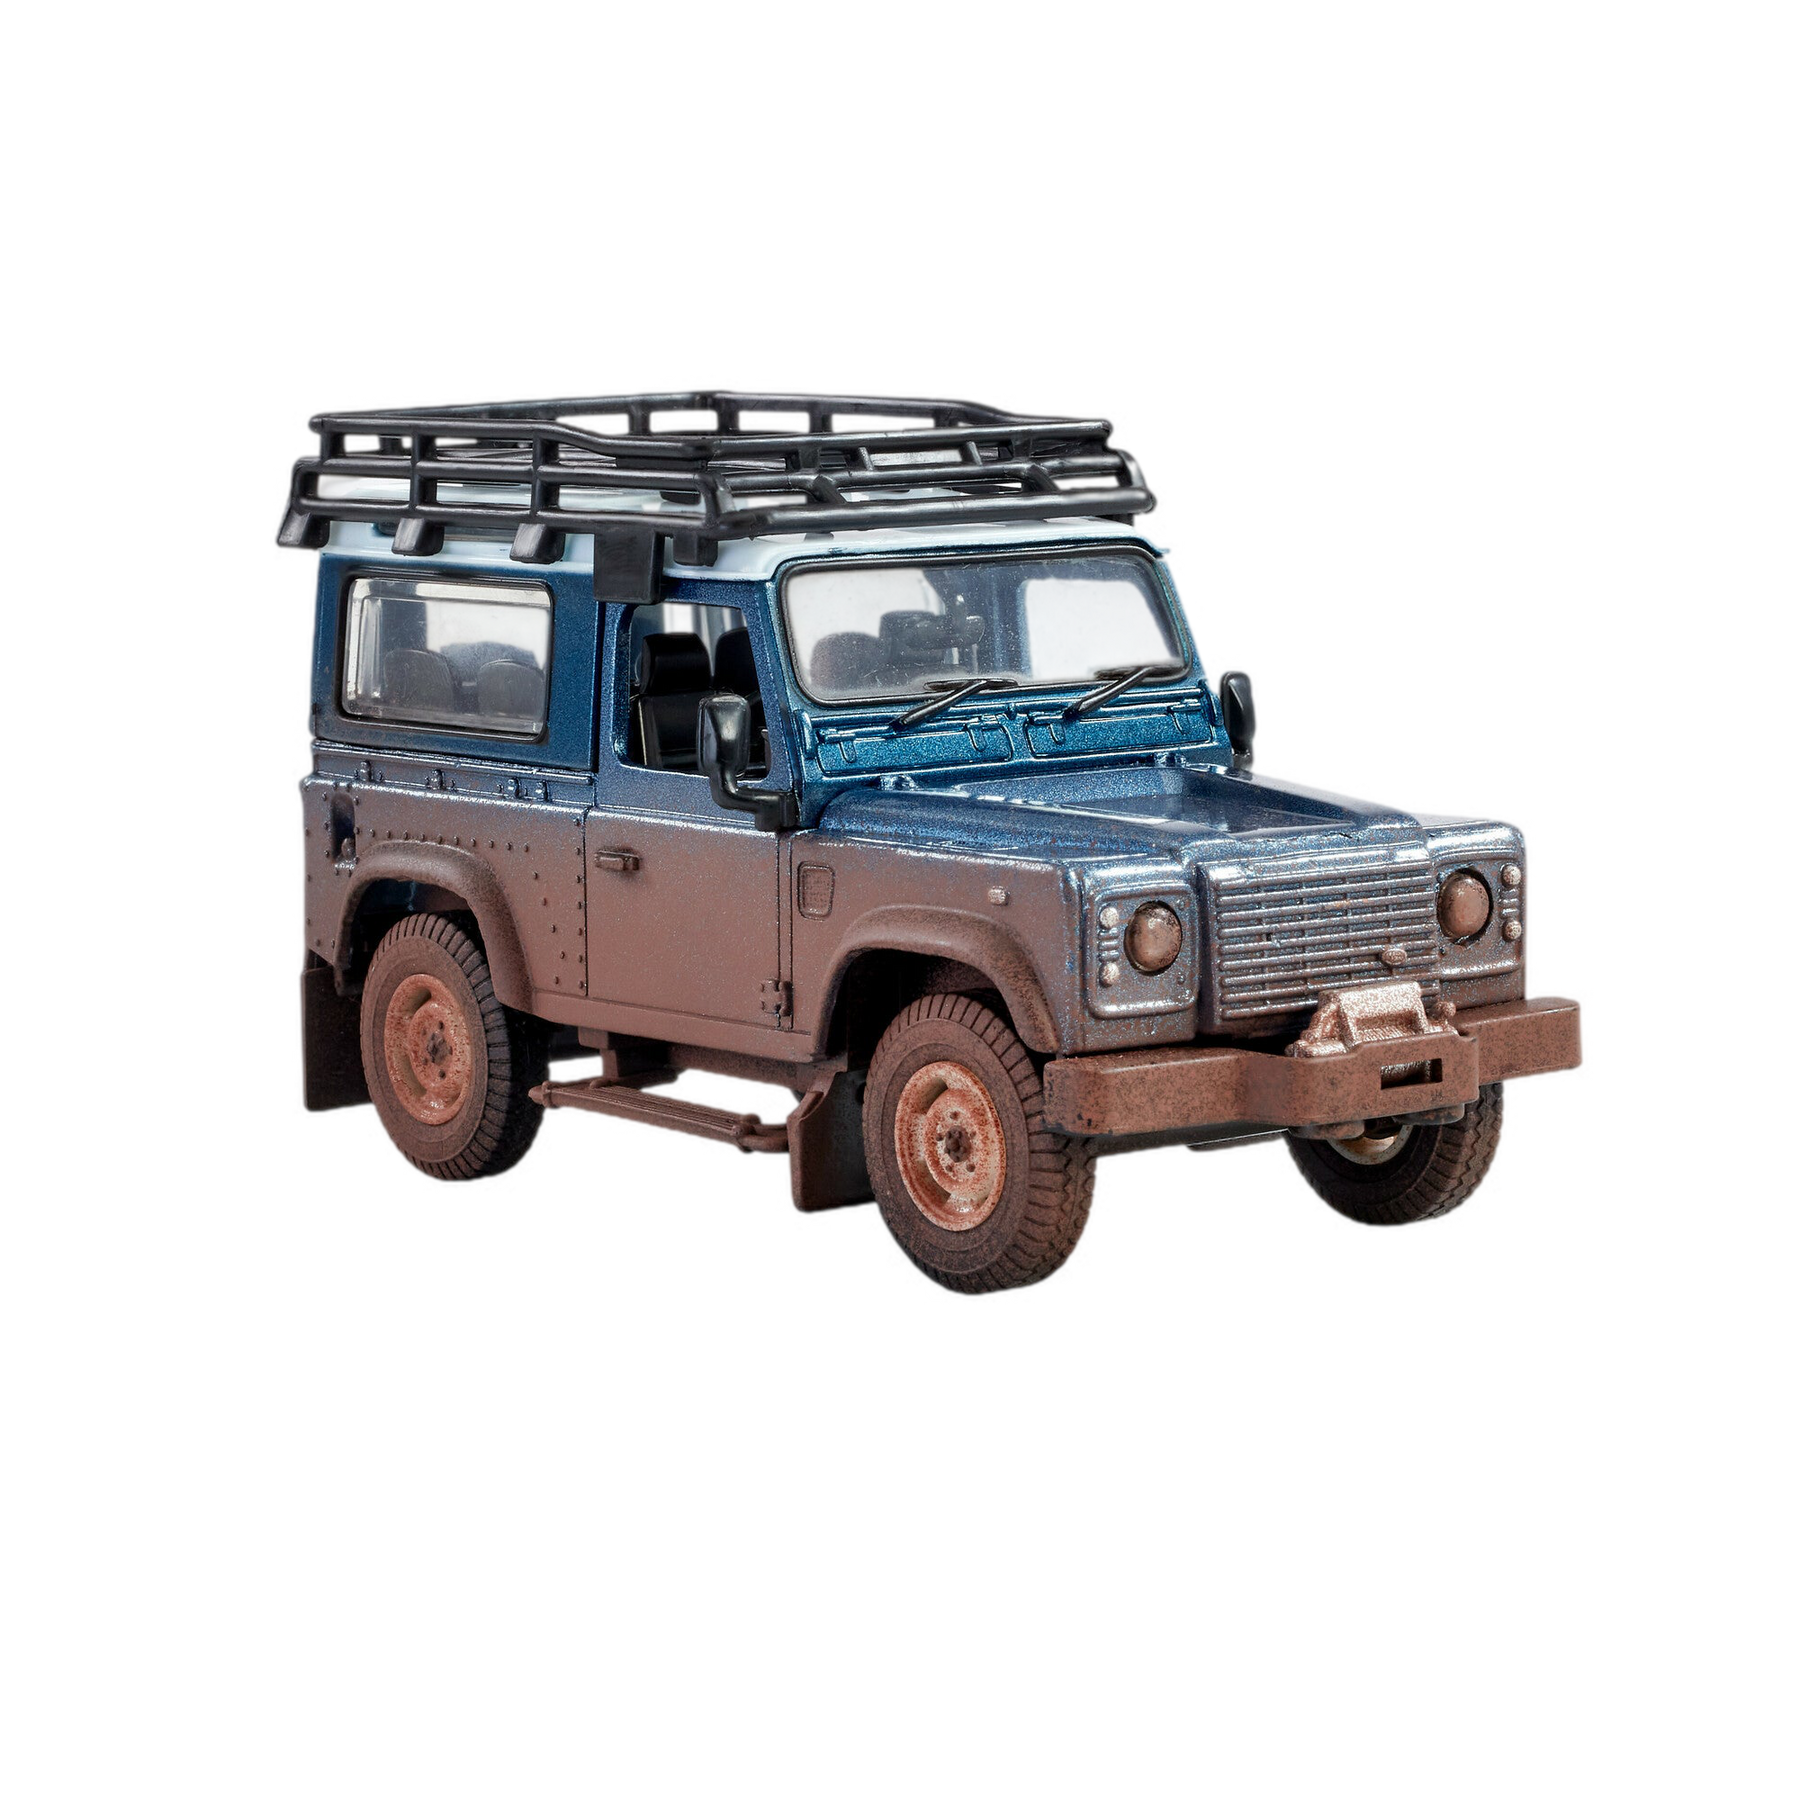 Muddy Land Rover Defender 1:32